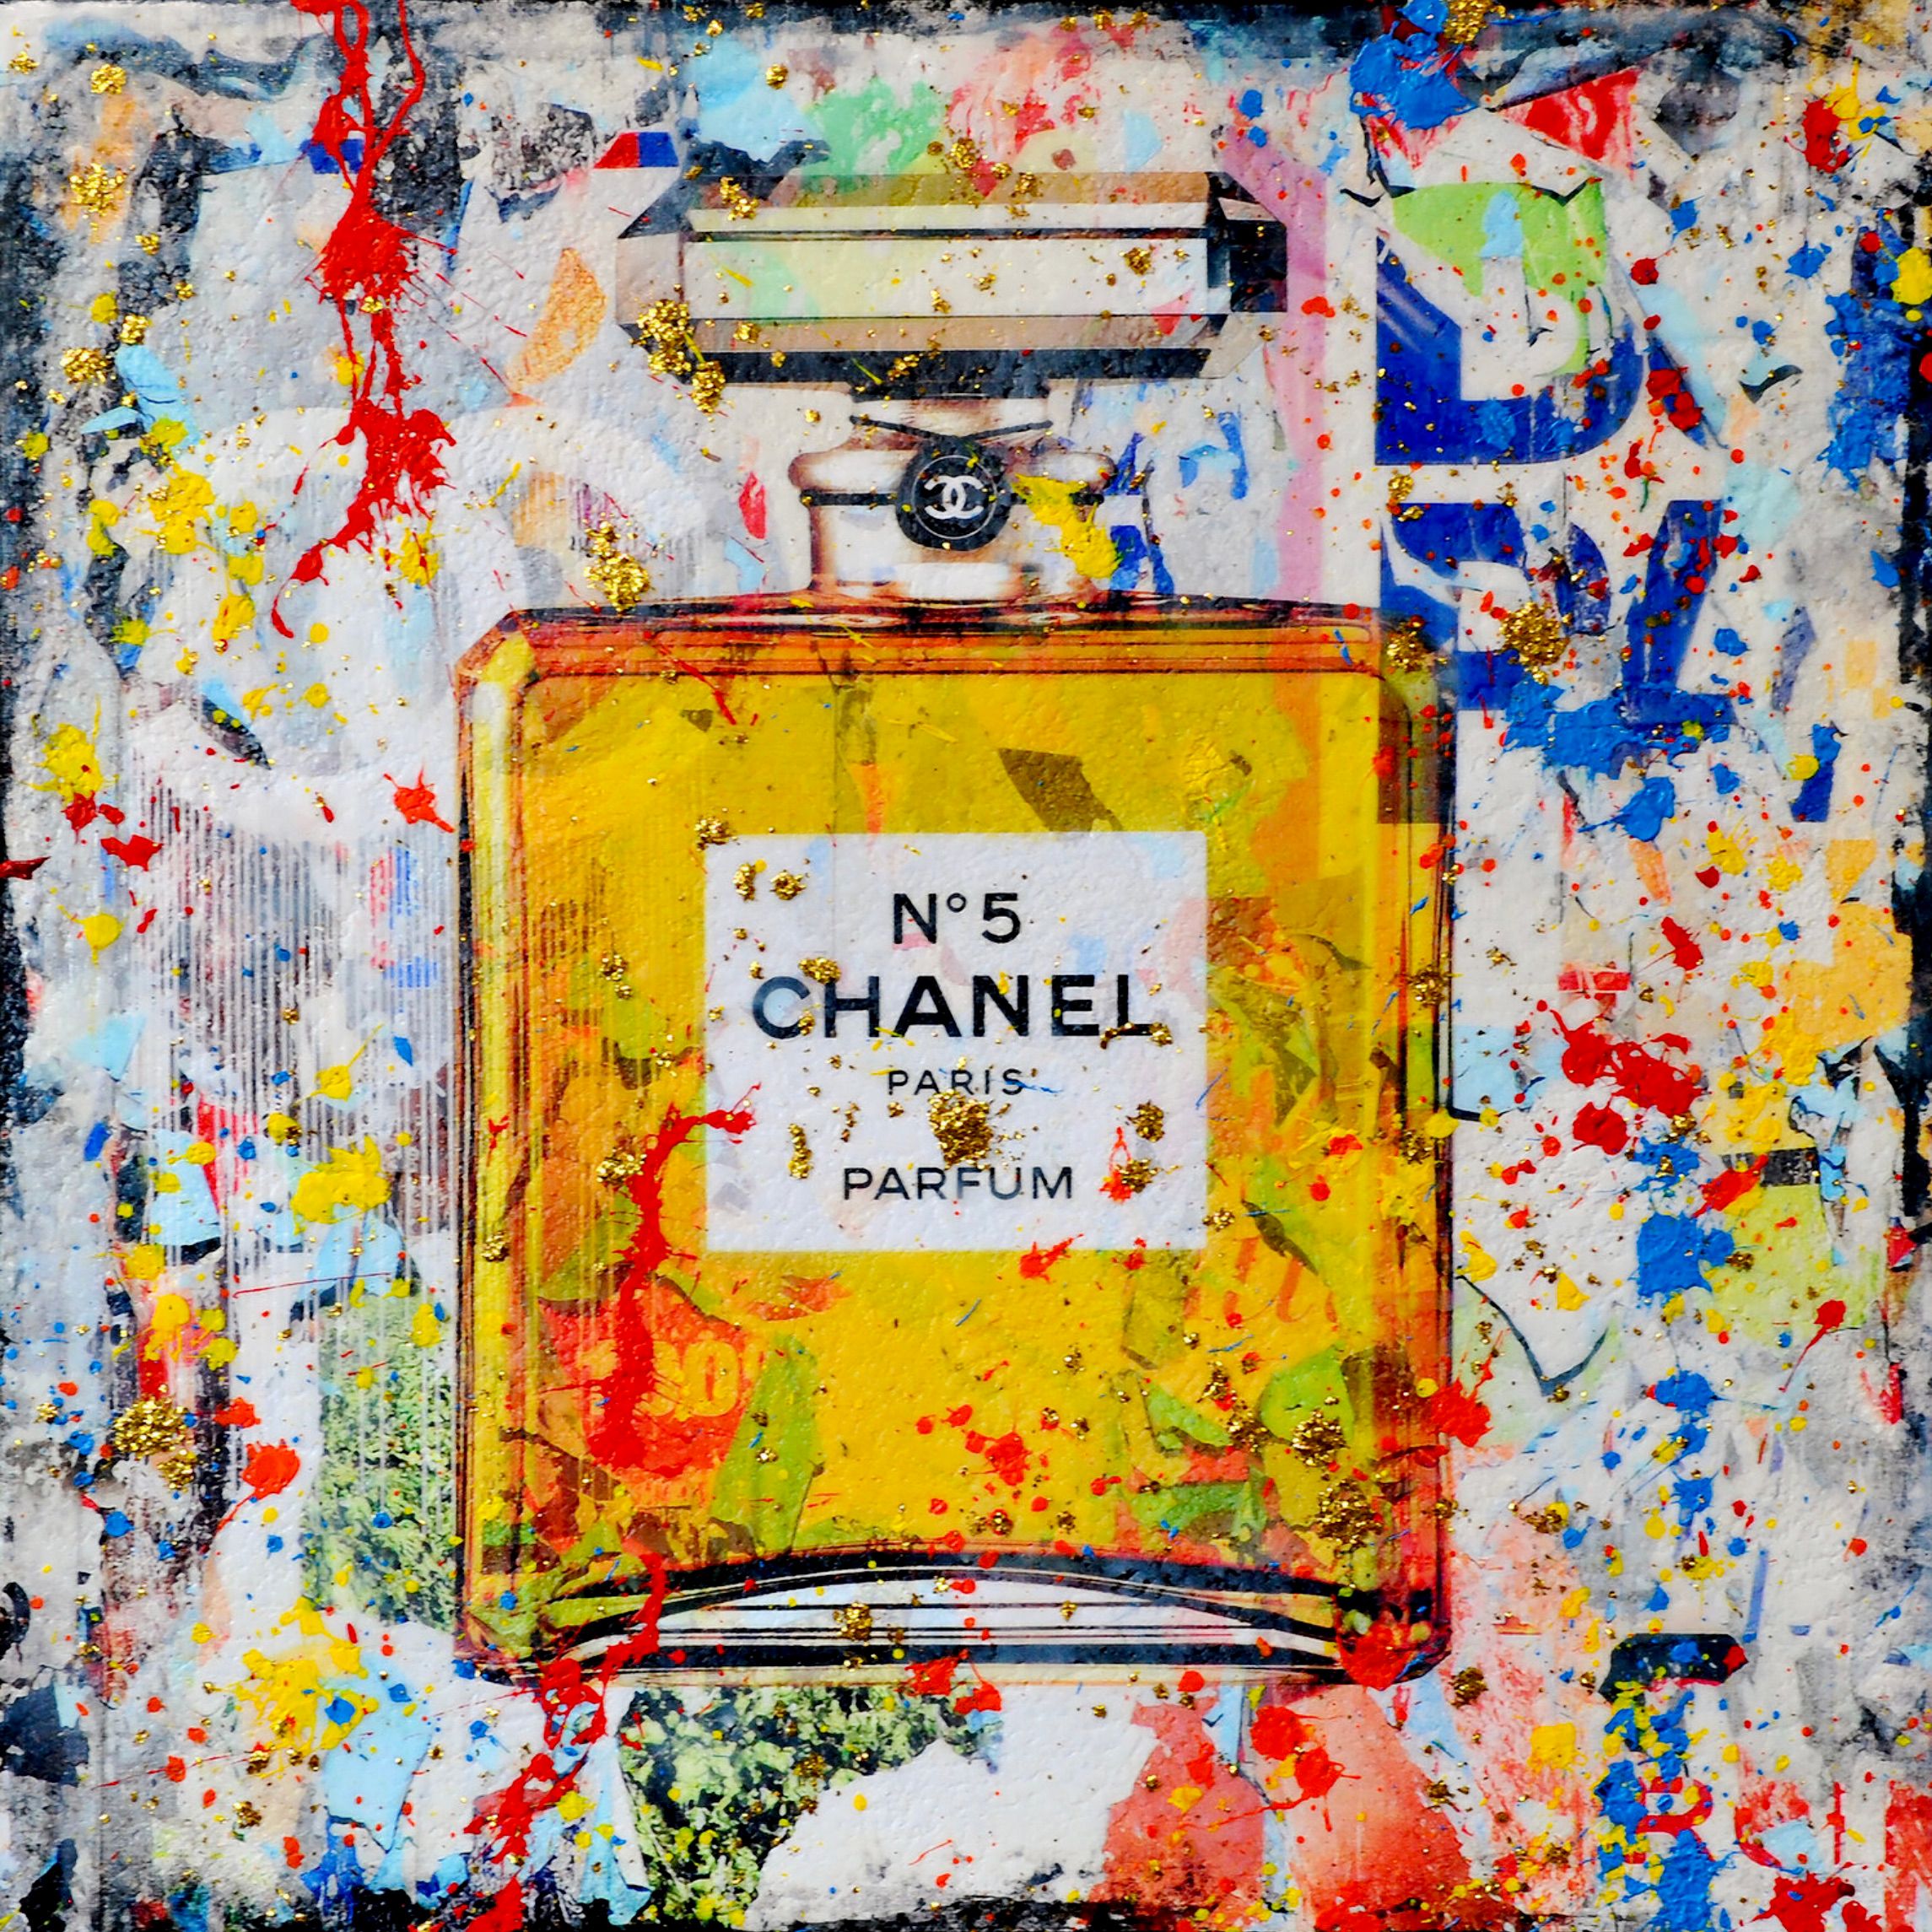 Karin Vermeer的 "Chanel No.5 "是对照片、绘画和拼贴画的数字组合和处理，成为新的、彩色的流行艺术作品。